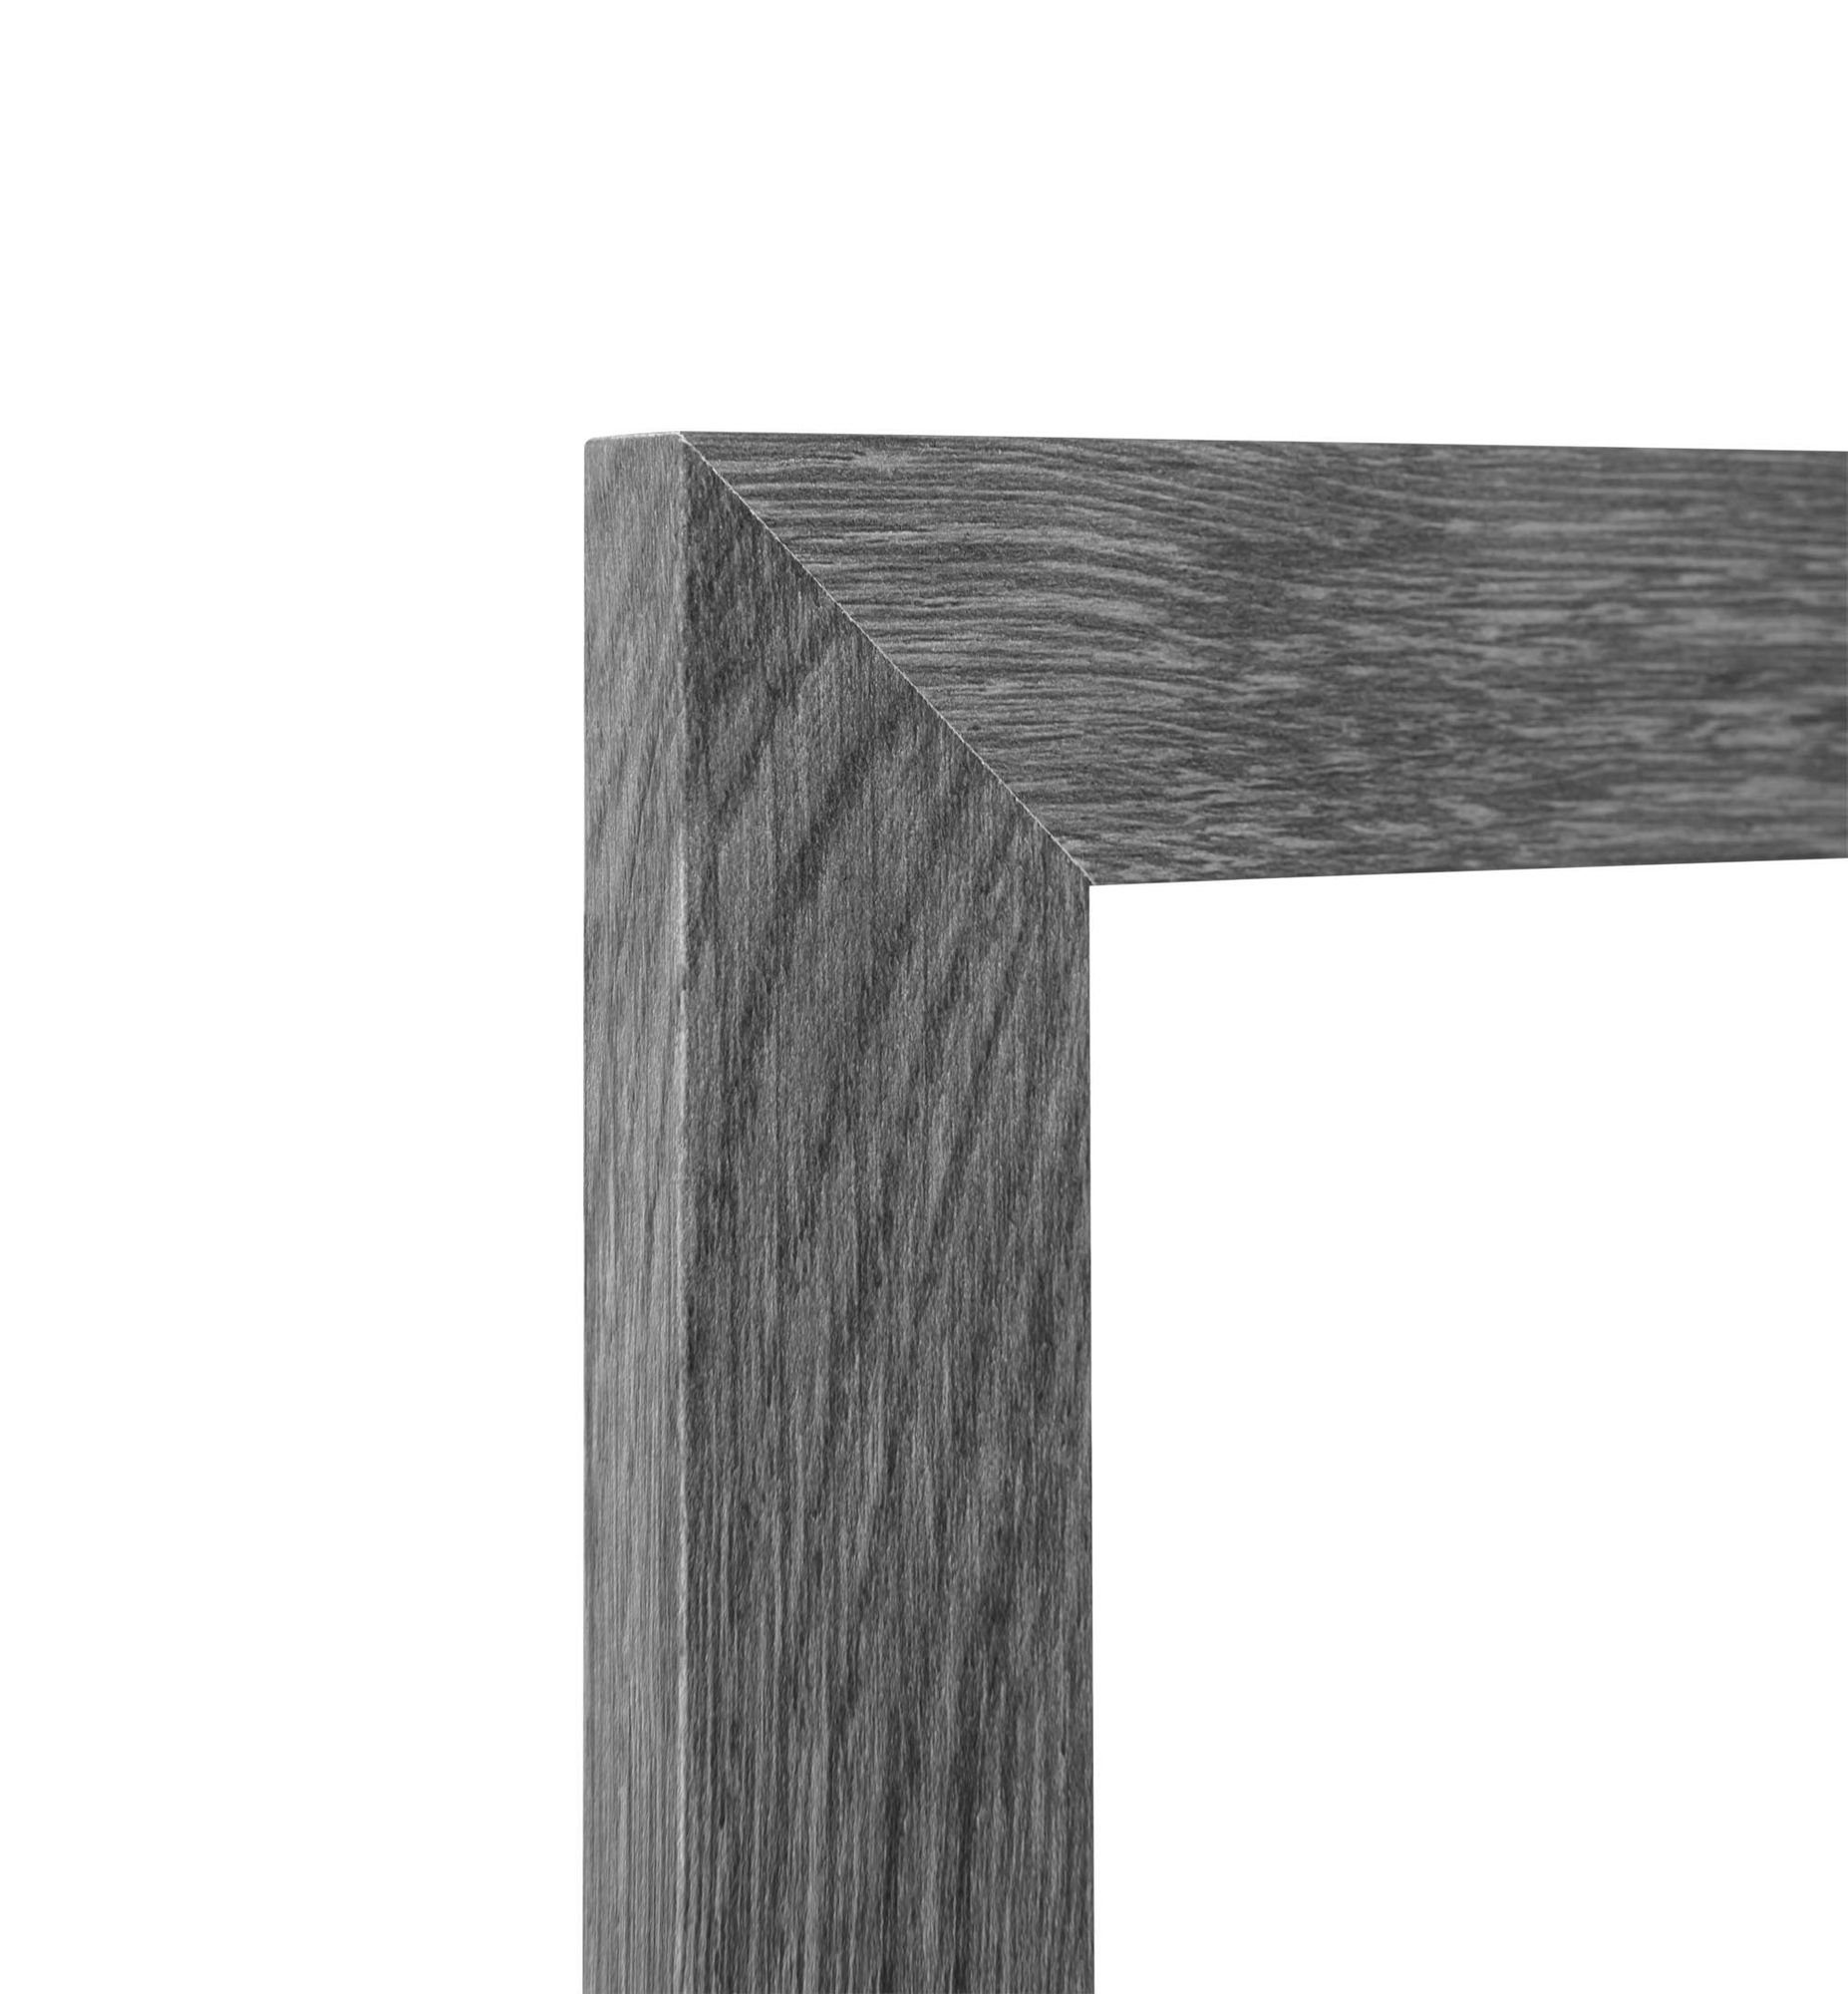 Acrylglas, DIN Bilderrahmen und Aufhänger altholz Clamaro Rahmen 'Collage' MDF FSC® Rahmen, eiche Rückwand Holz inkl. CLAMARO